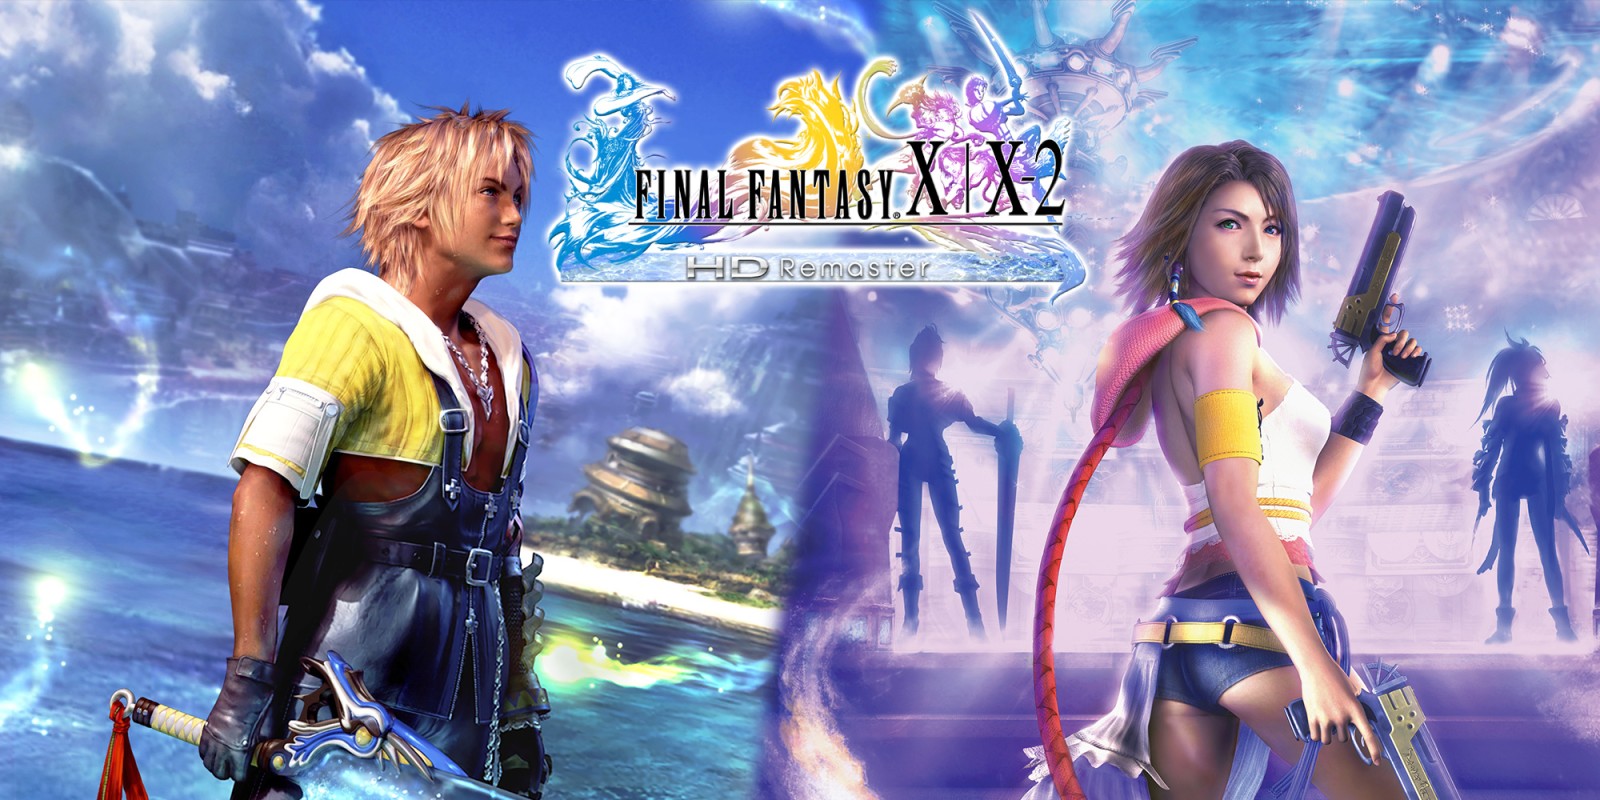 download final fantasy xx 2 hd remaster vita